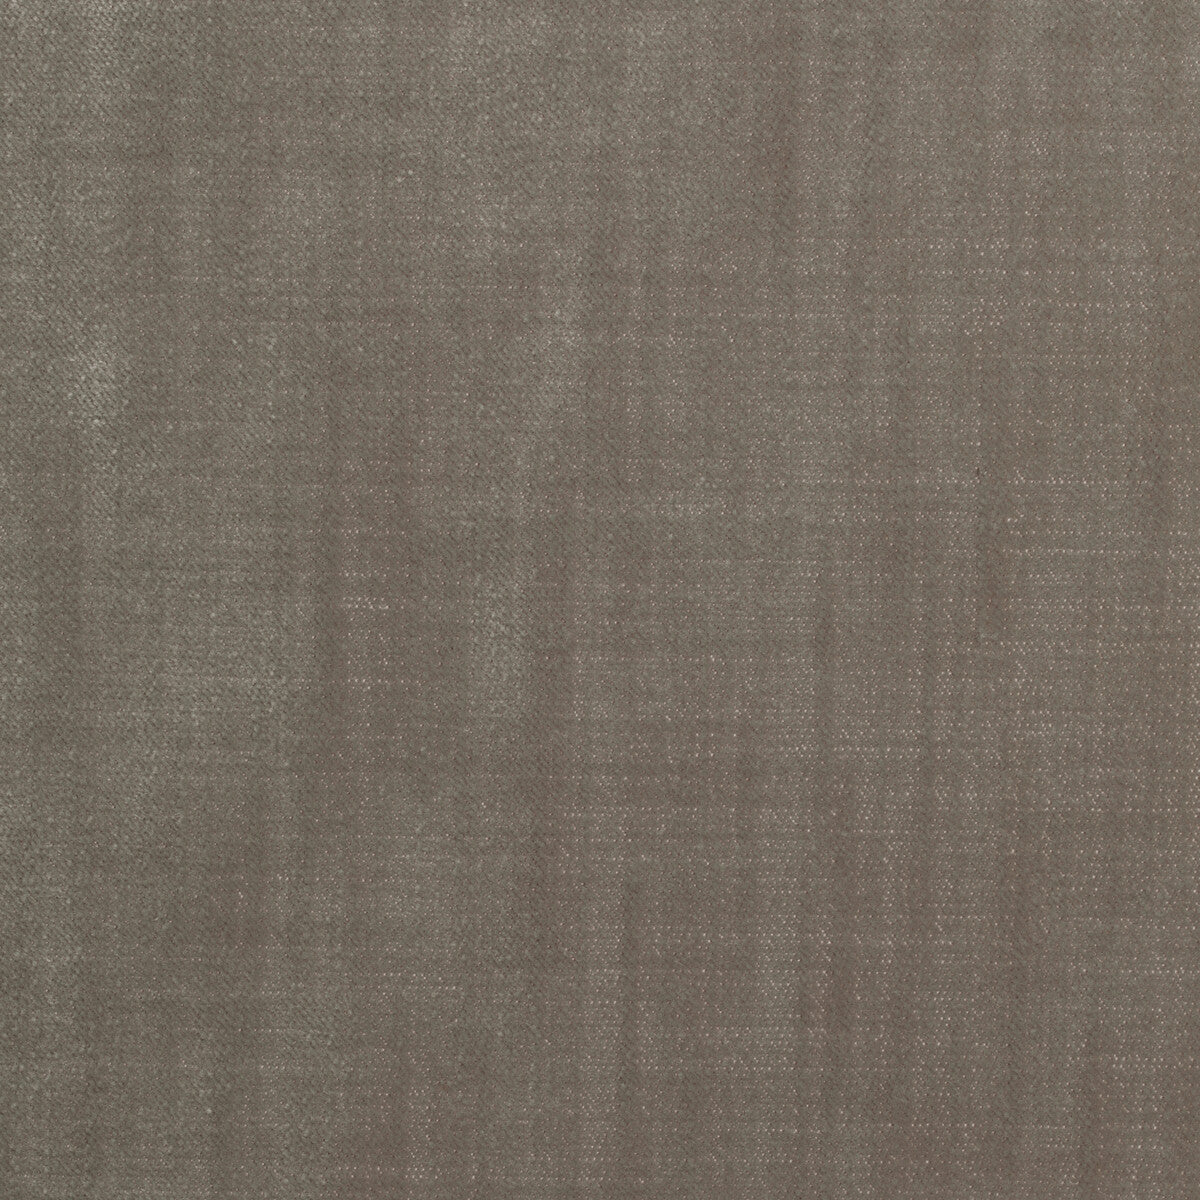 Kravet Design fabric in 36096-1616 color - pattern 36096.1616.0 - by Kravet Design in the The Complete Velvet collection